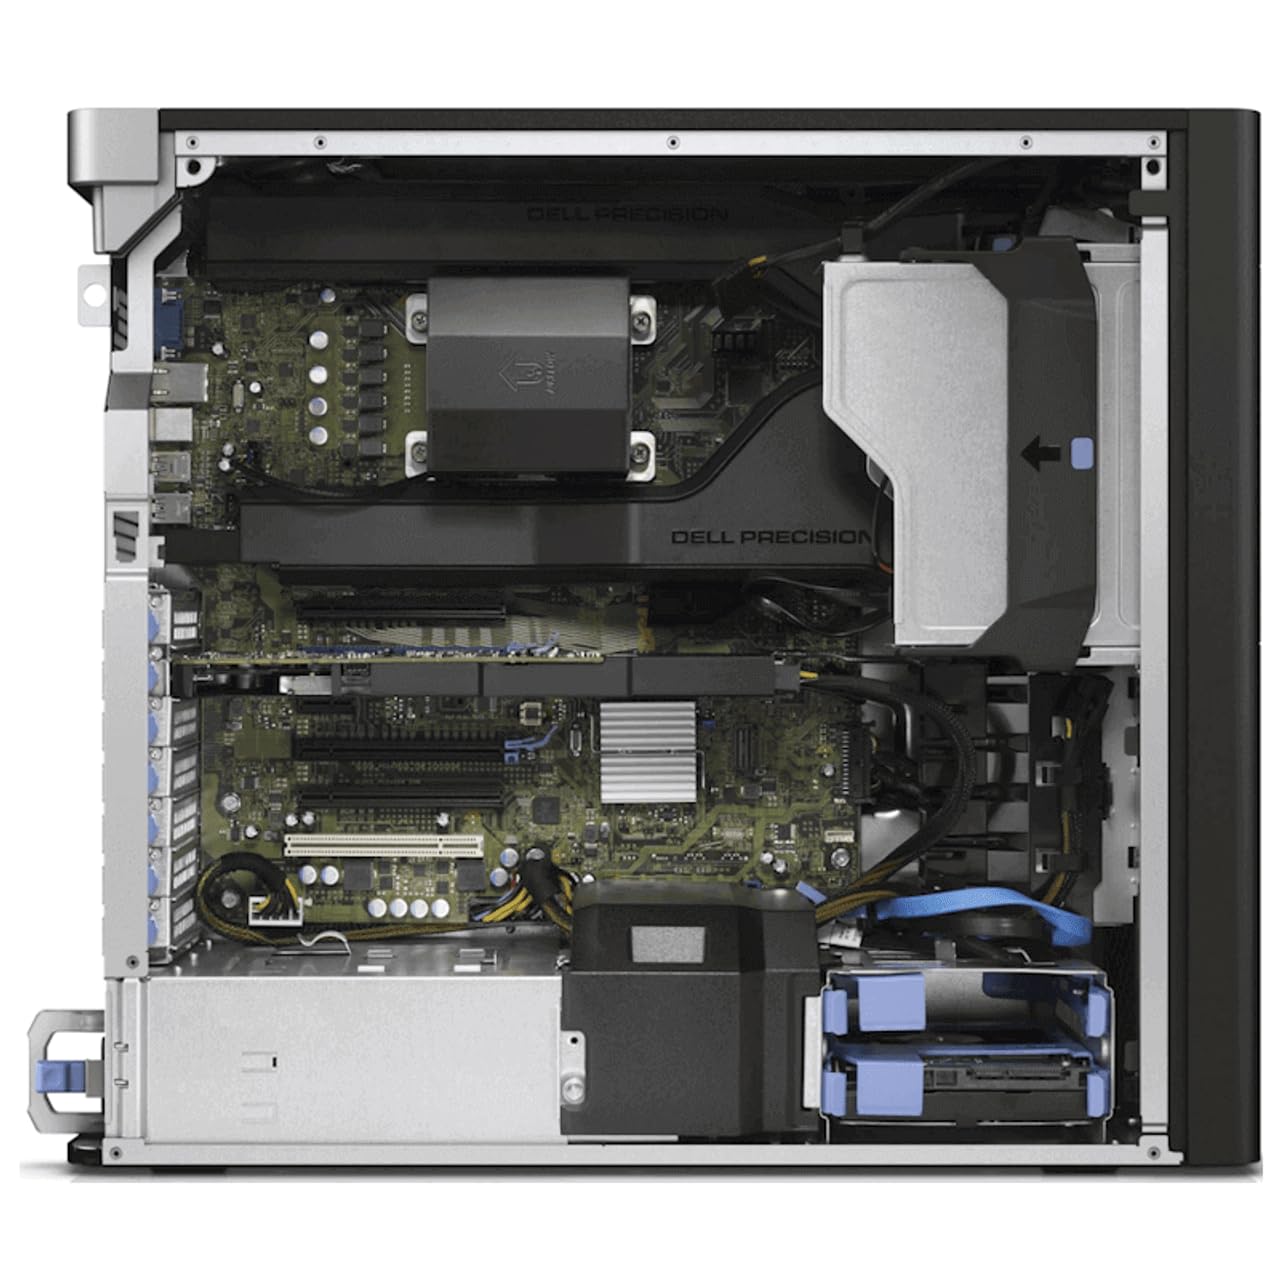 Dell Precision T5810 Mid-Tower Workstation - Intel Xeon E5-1620 v3 3.5GHz 4 Core Processor, 64GB DDR4 Memory, 4TB HDD, Nvidia Quadro K4200 Graphics Card, Windows 10 Pro. (Renewed)